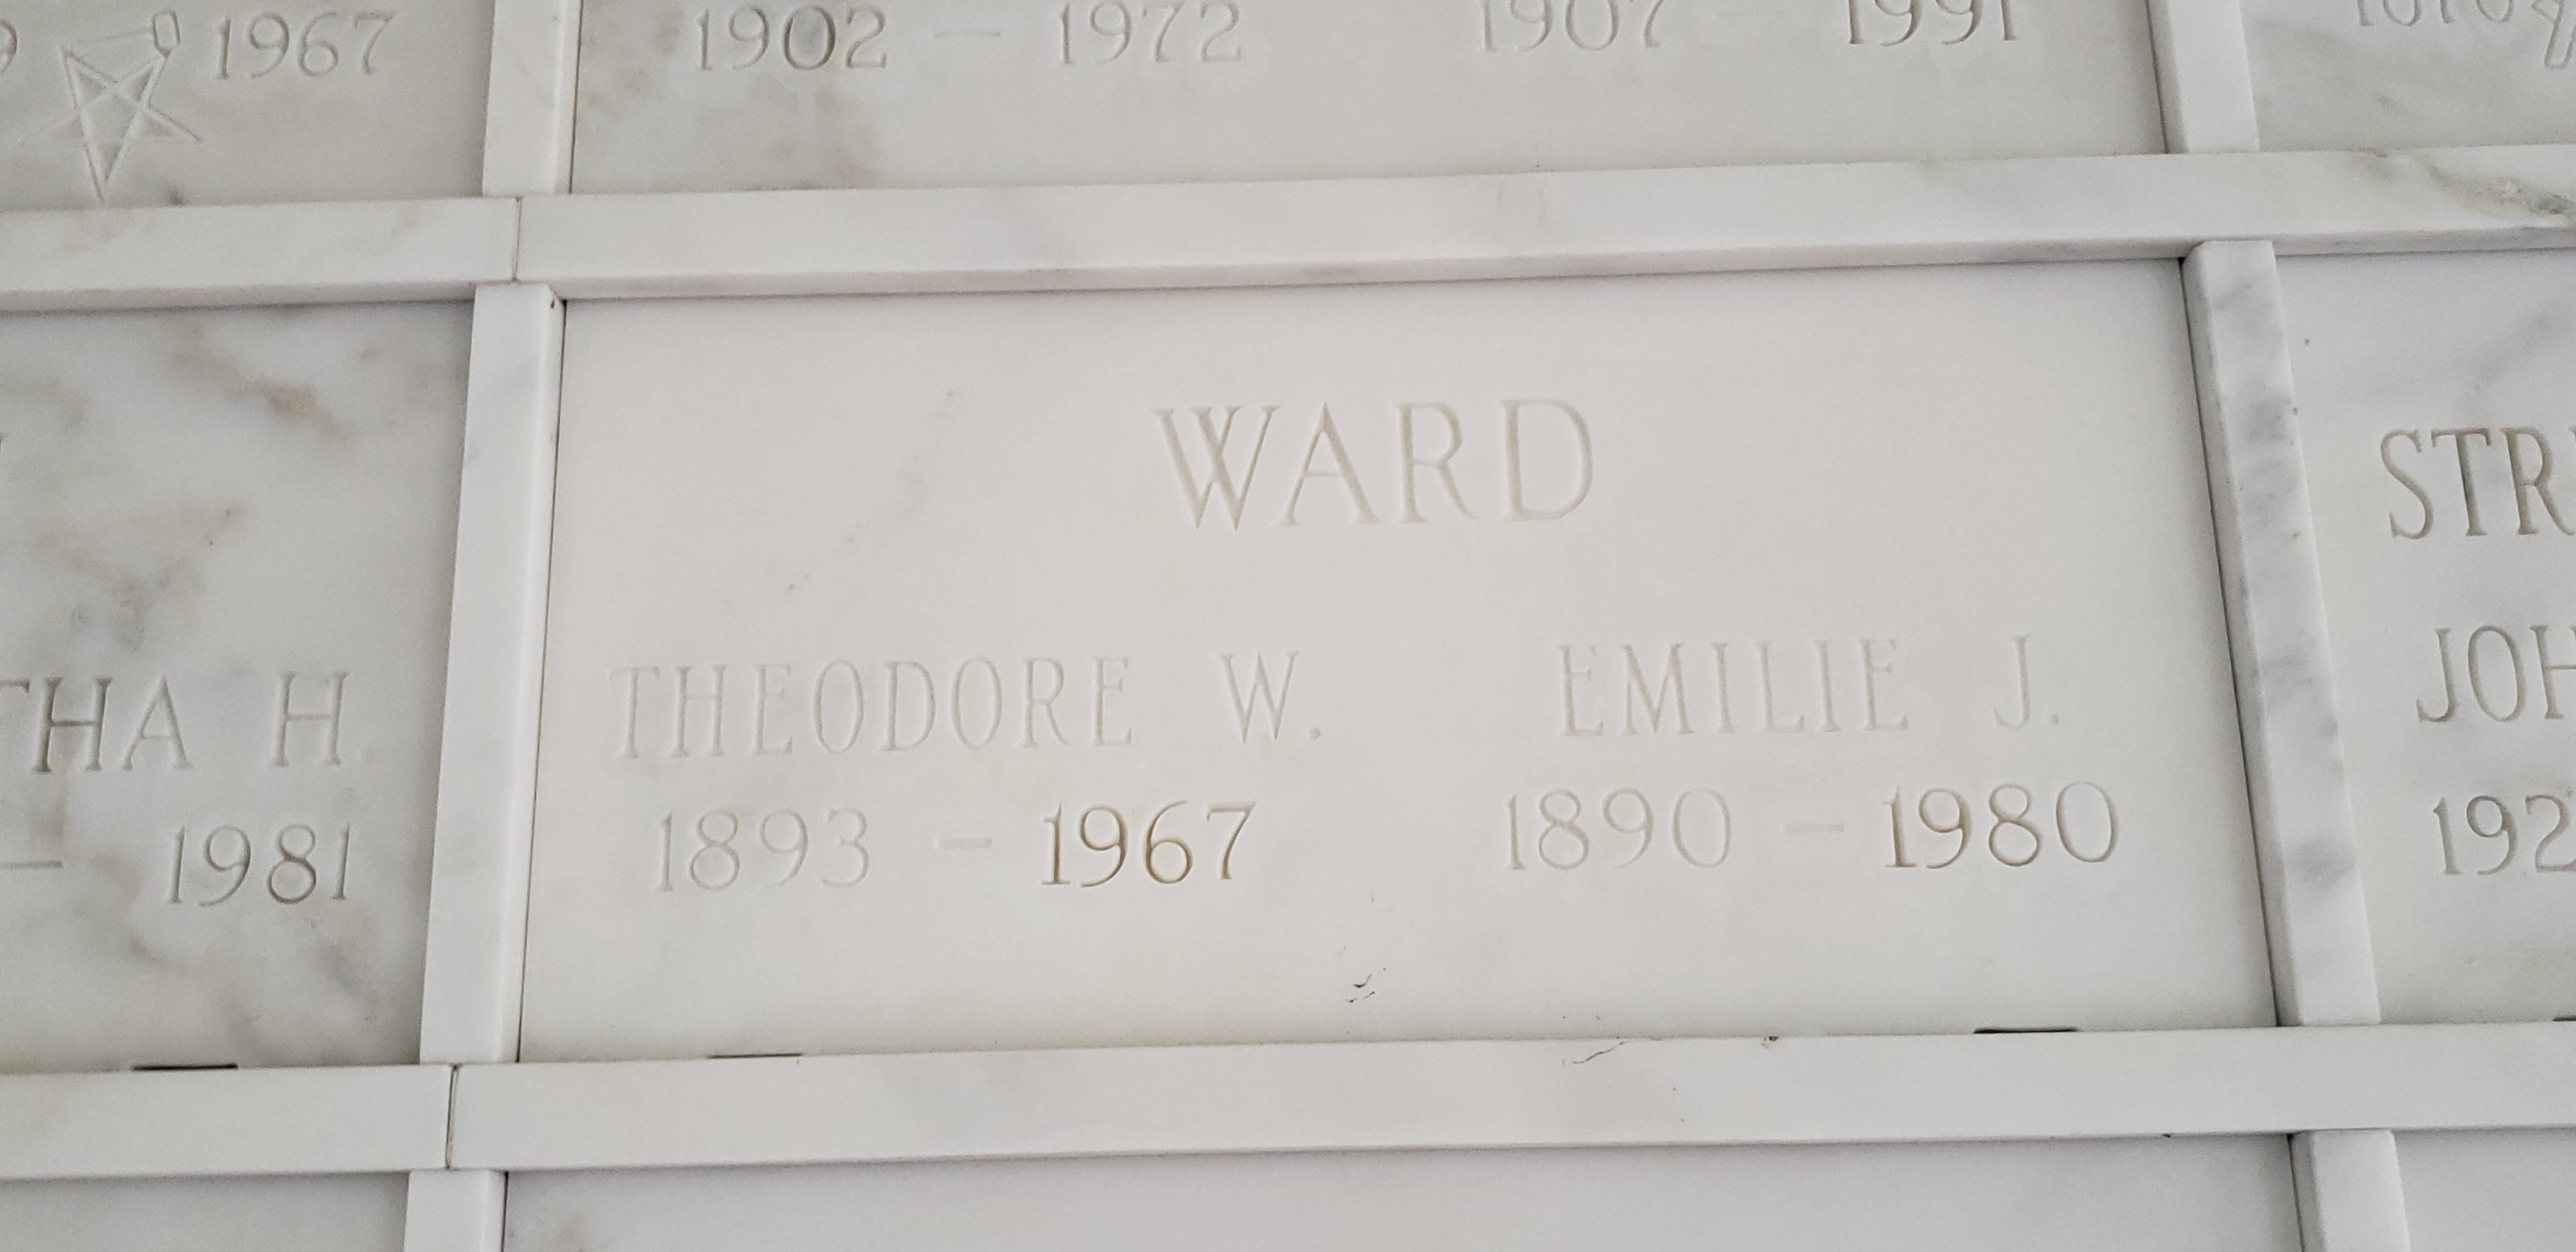 Theodore W Ward